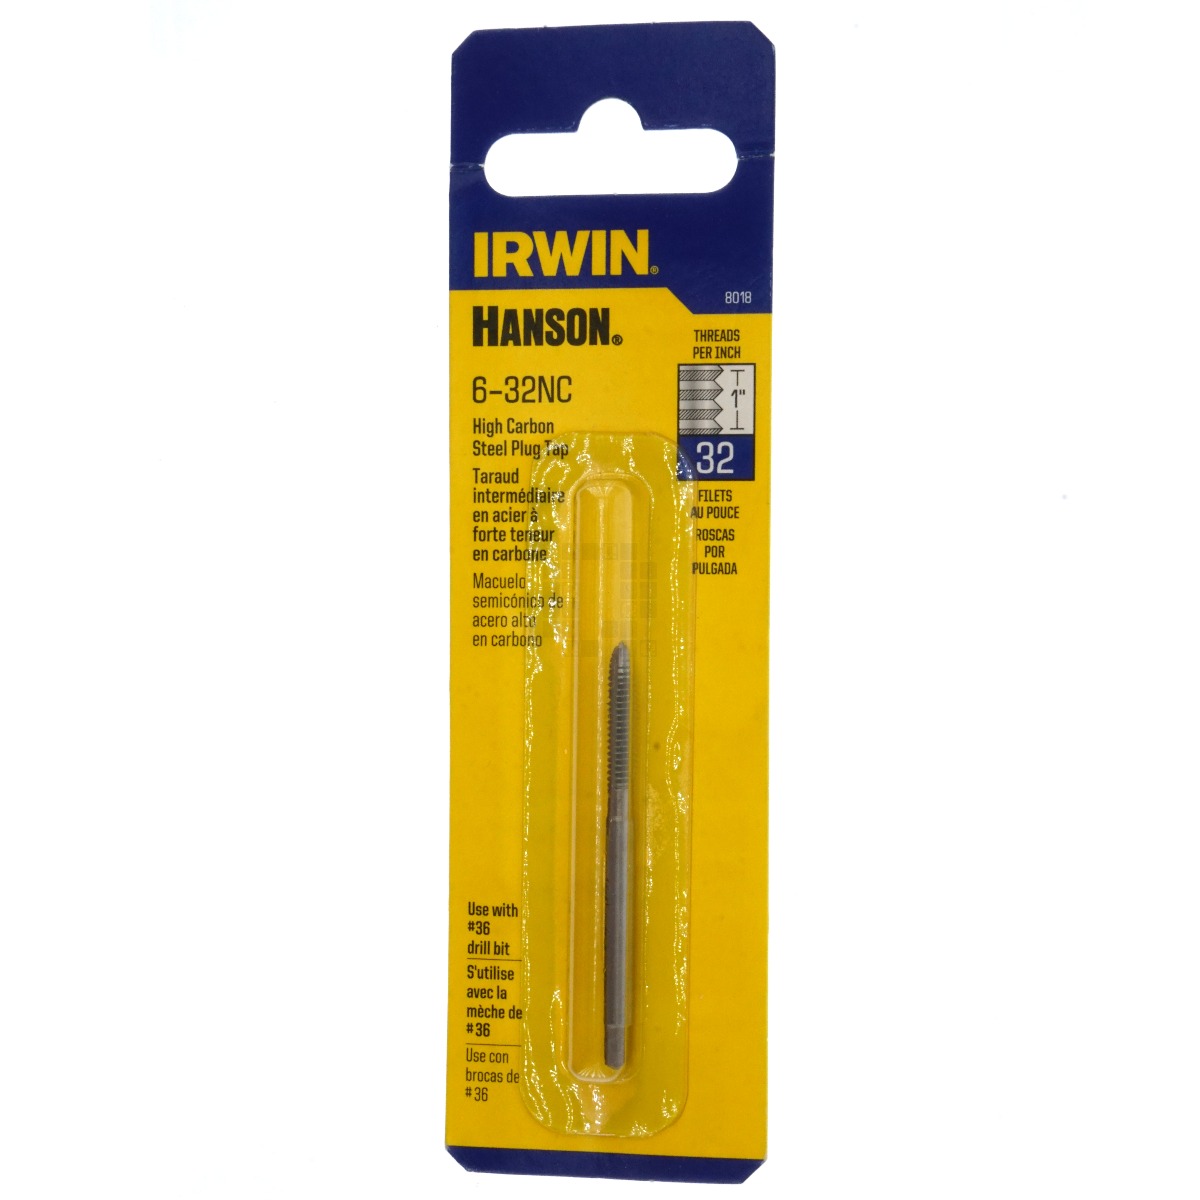 8018 Irwin Hanson #6-32NC High Carbon Steel Plug Tap